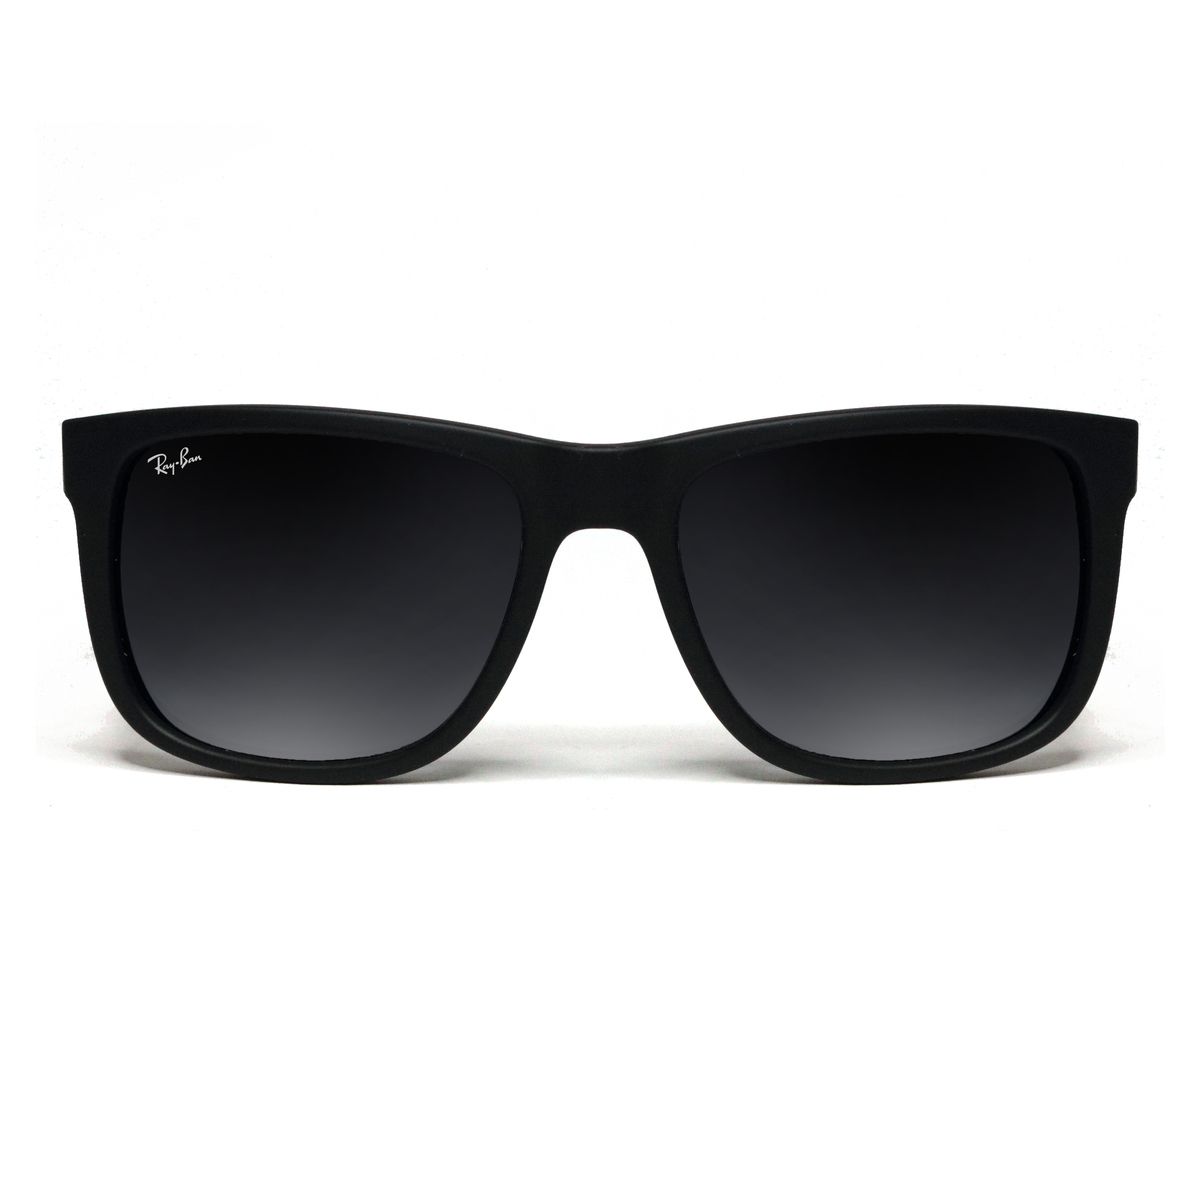 RB4165 Square Sunglasses 601 8G - size 55